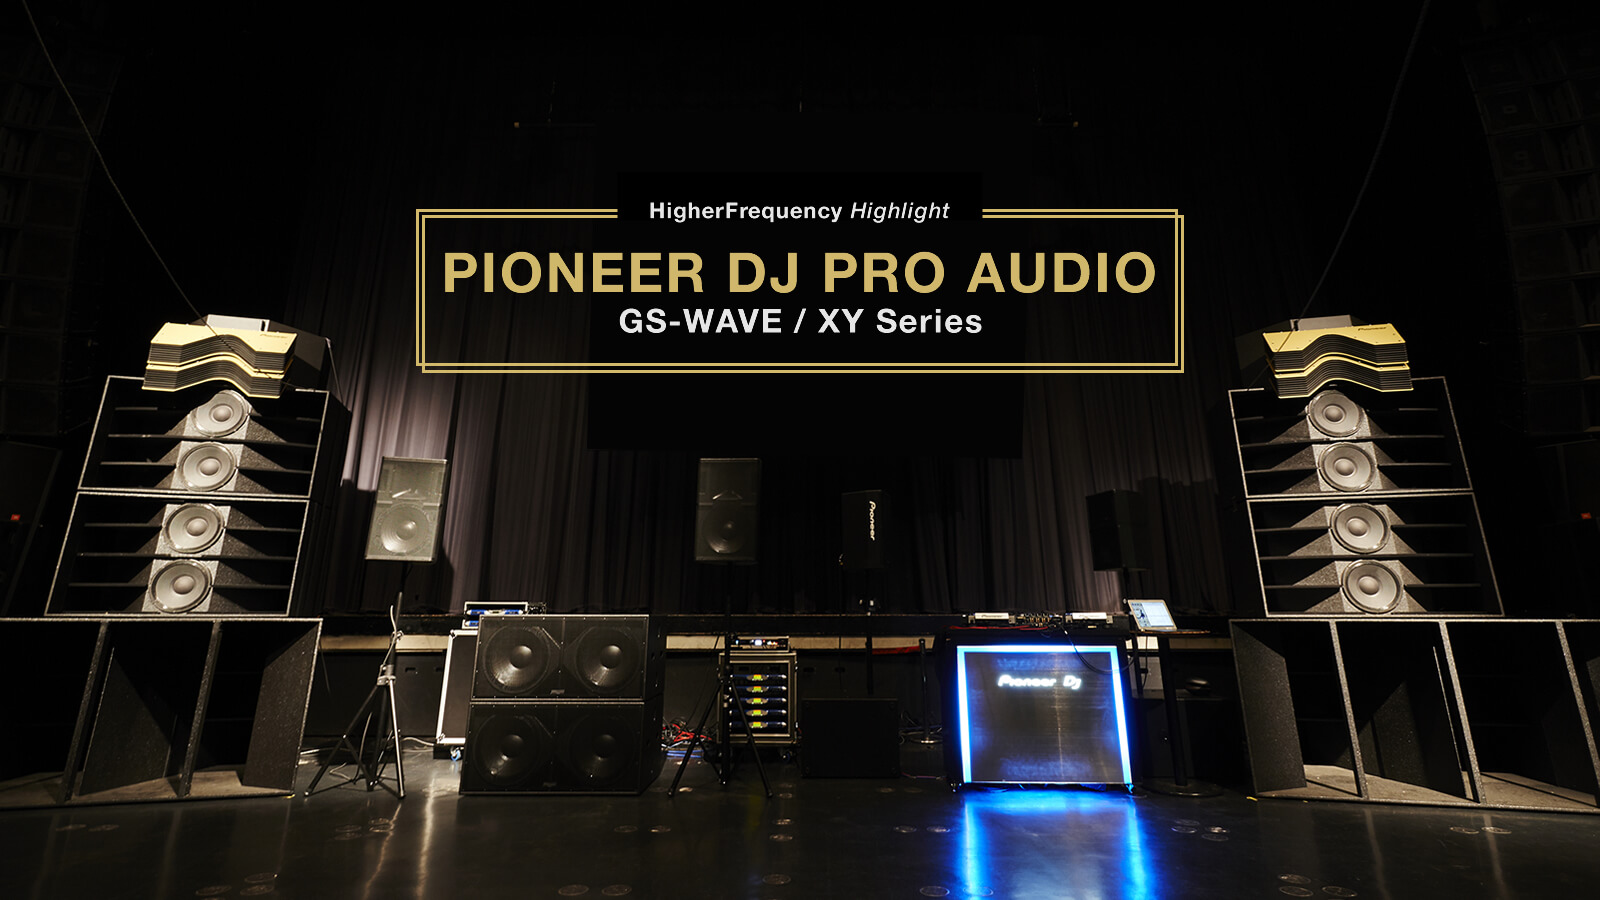 PIONEER DJ PRO AUDIO GS-WAVE / XY Series